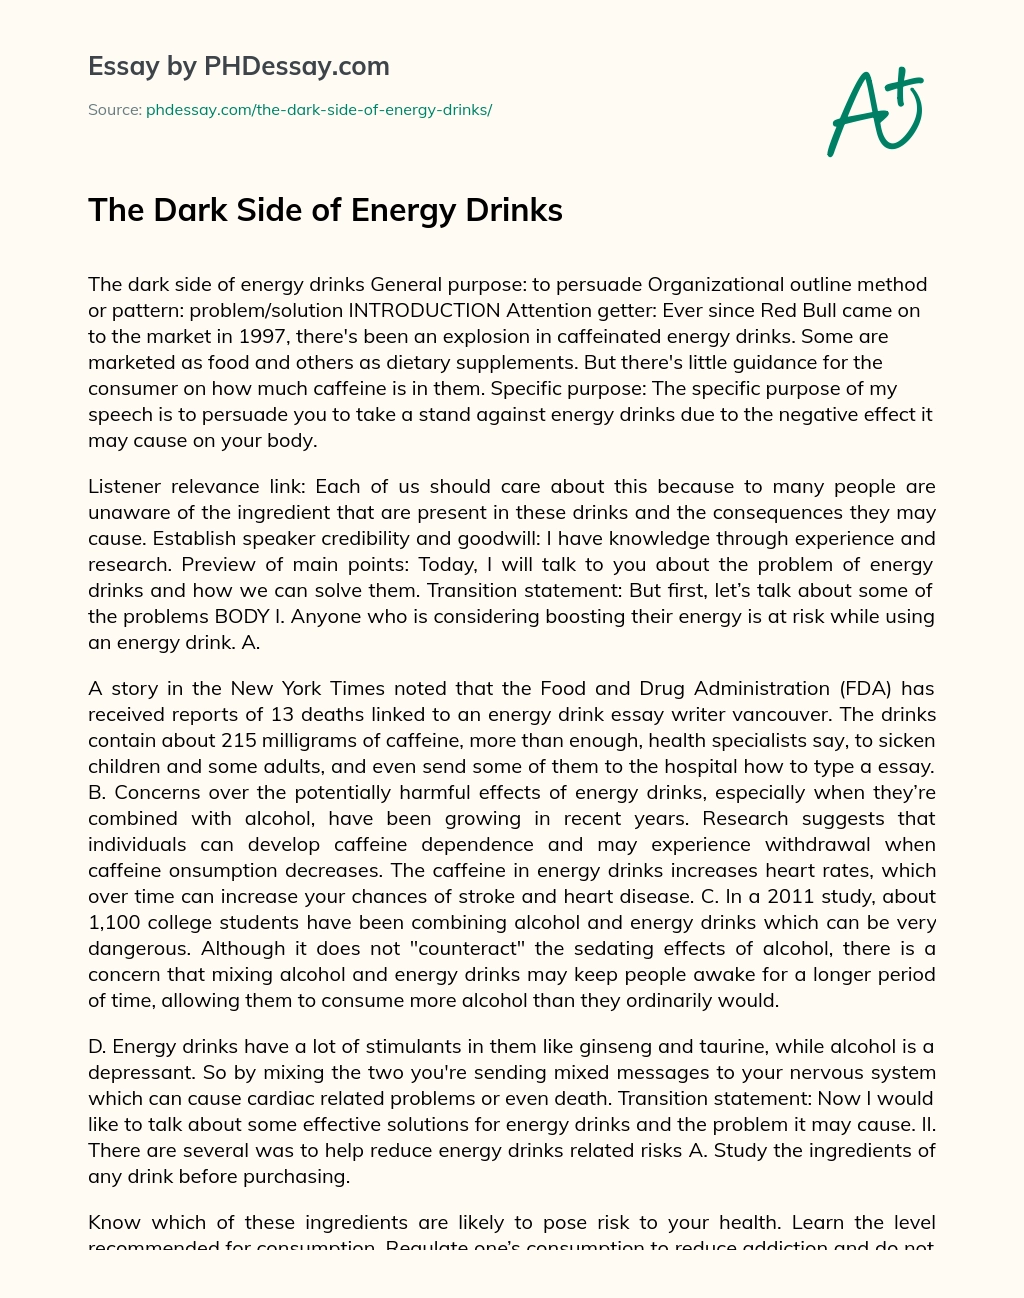 The Dark Side of Energy Drinks essay